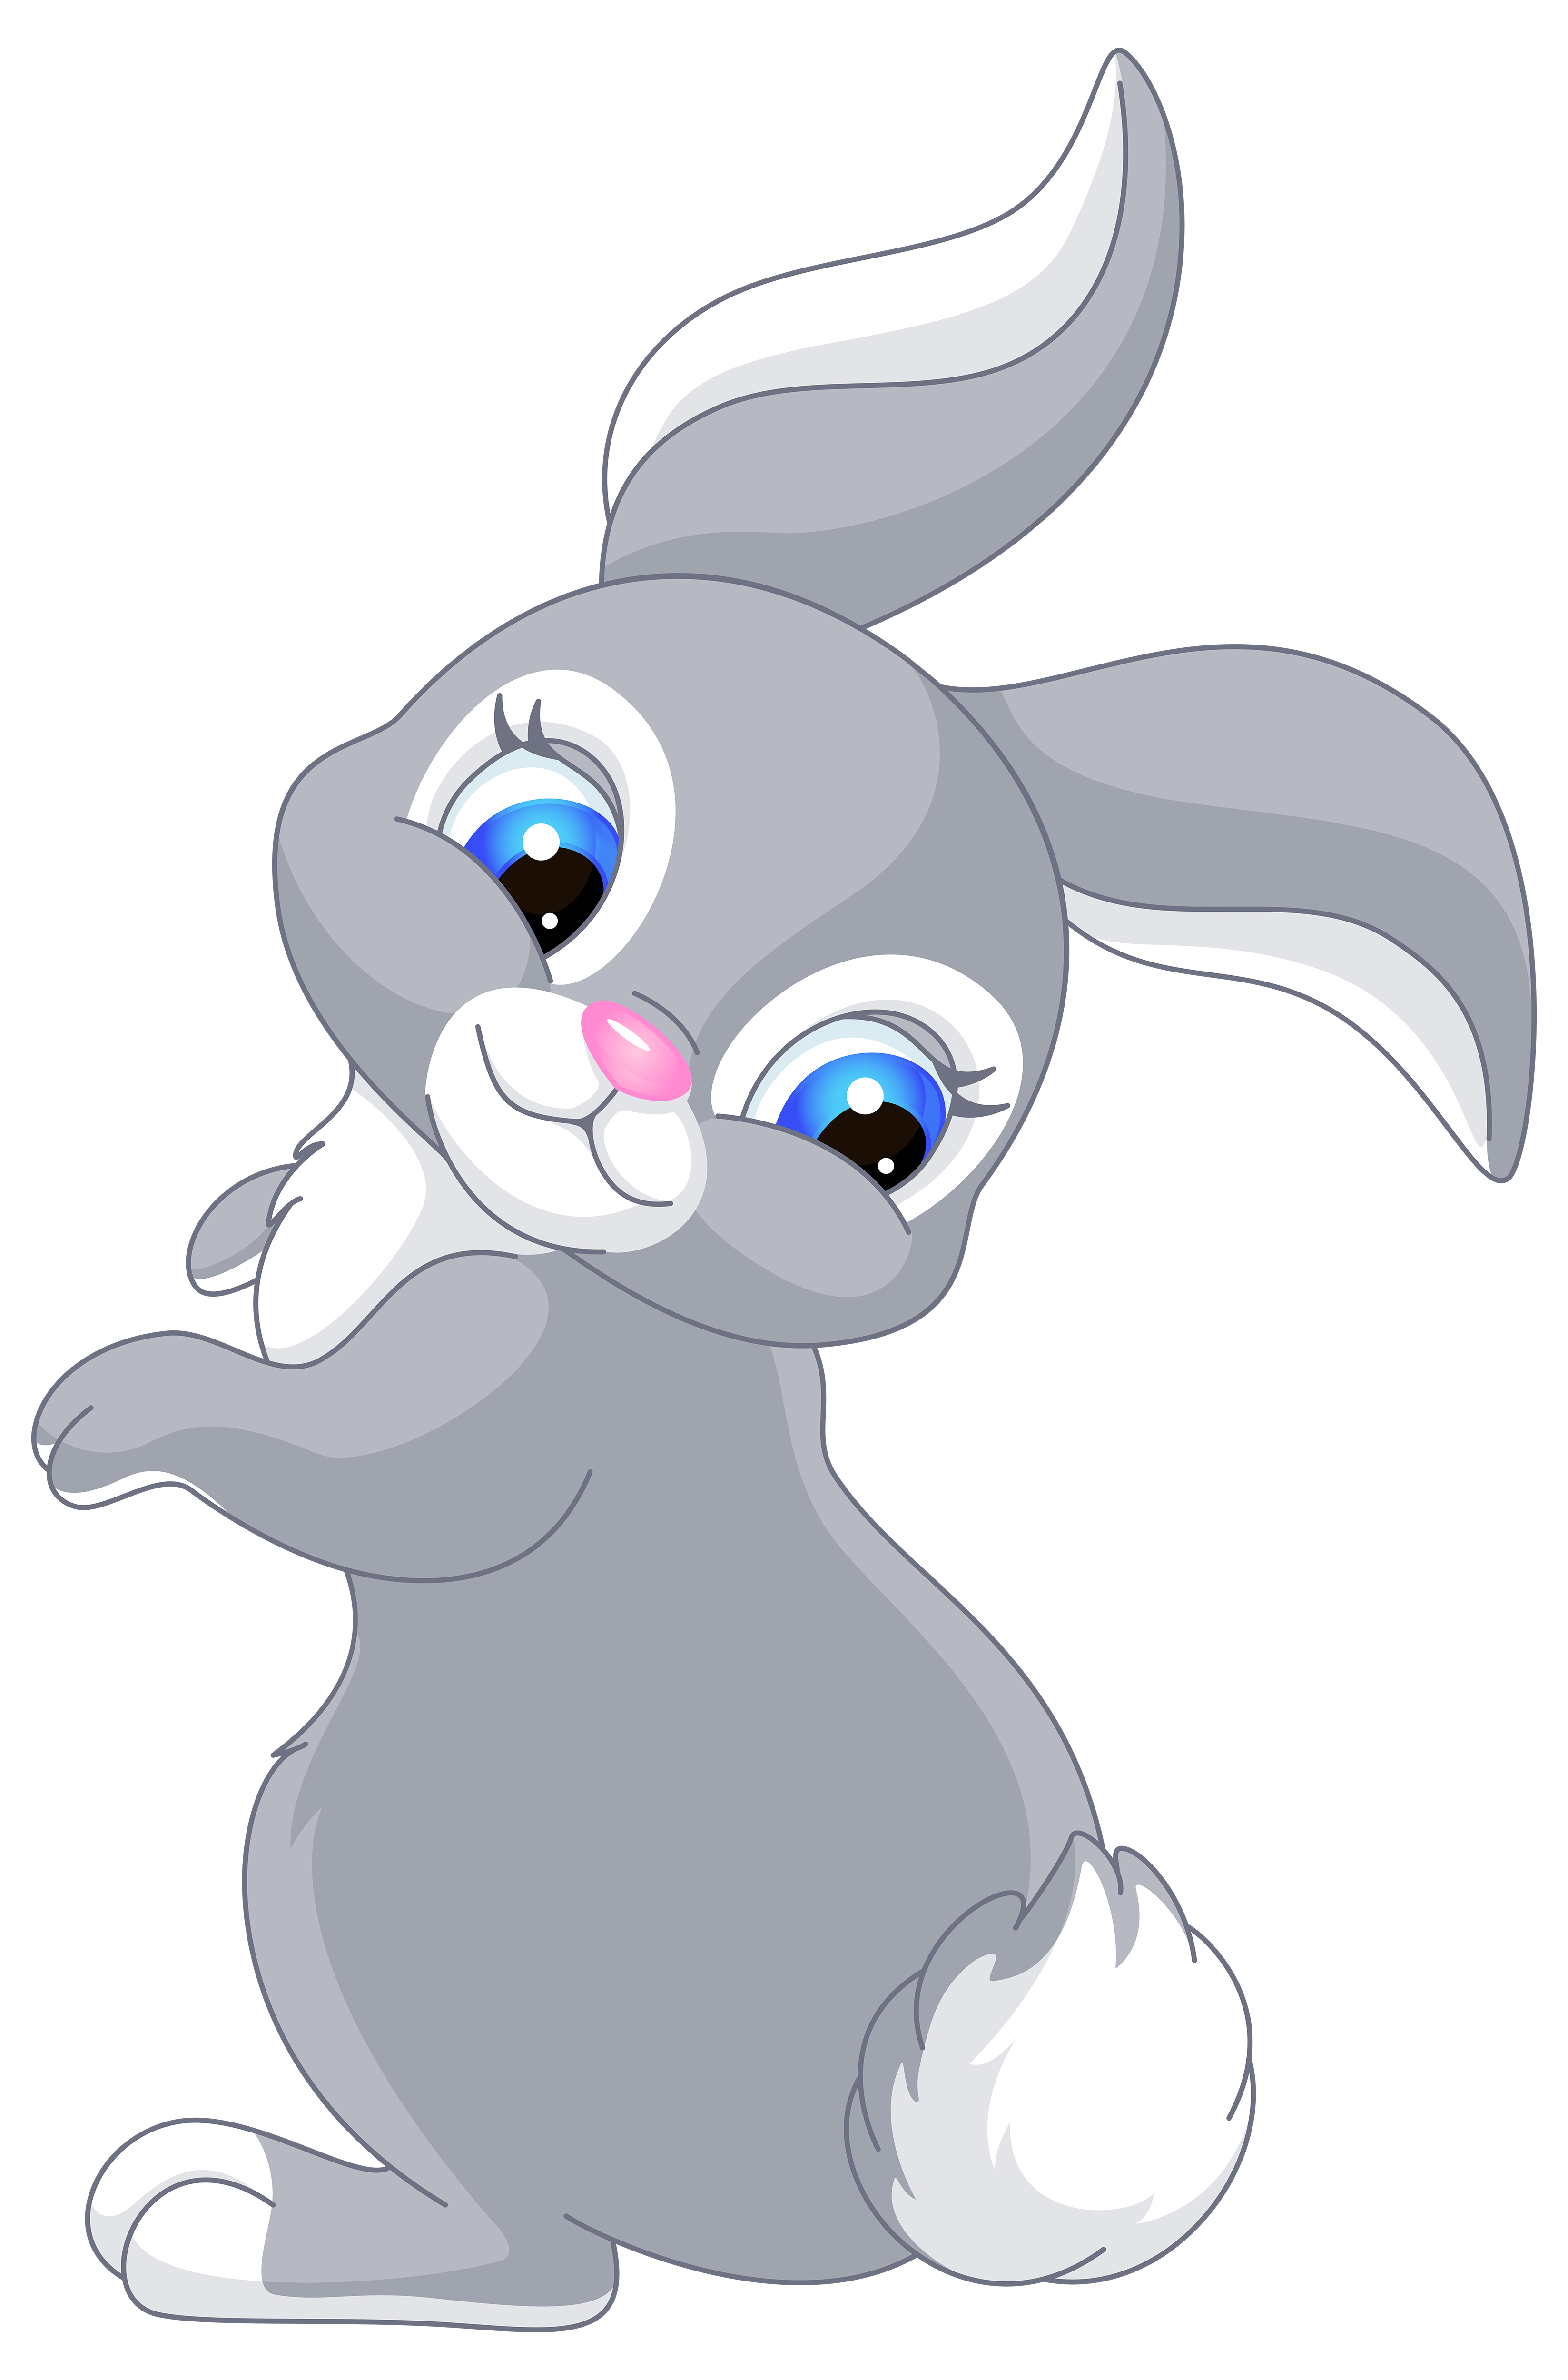 Cute Bunny Cartoon Png Clip Art Image - Rabbit Cartoon, Transparent background PNG HD thumbnail